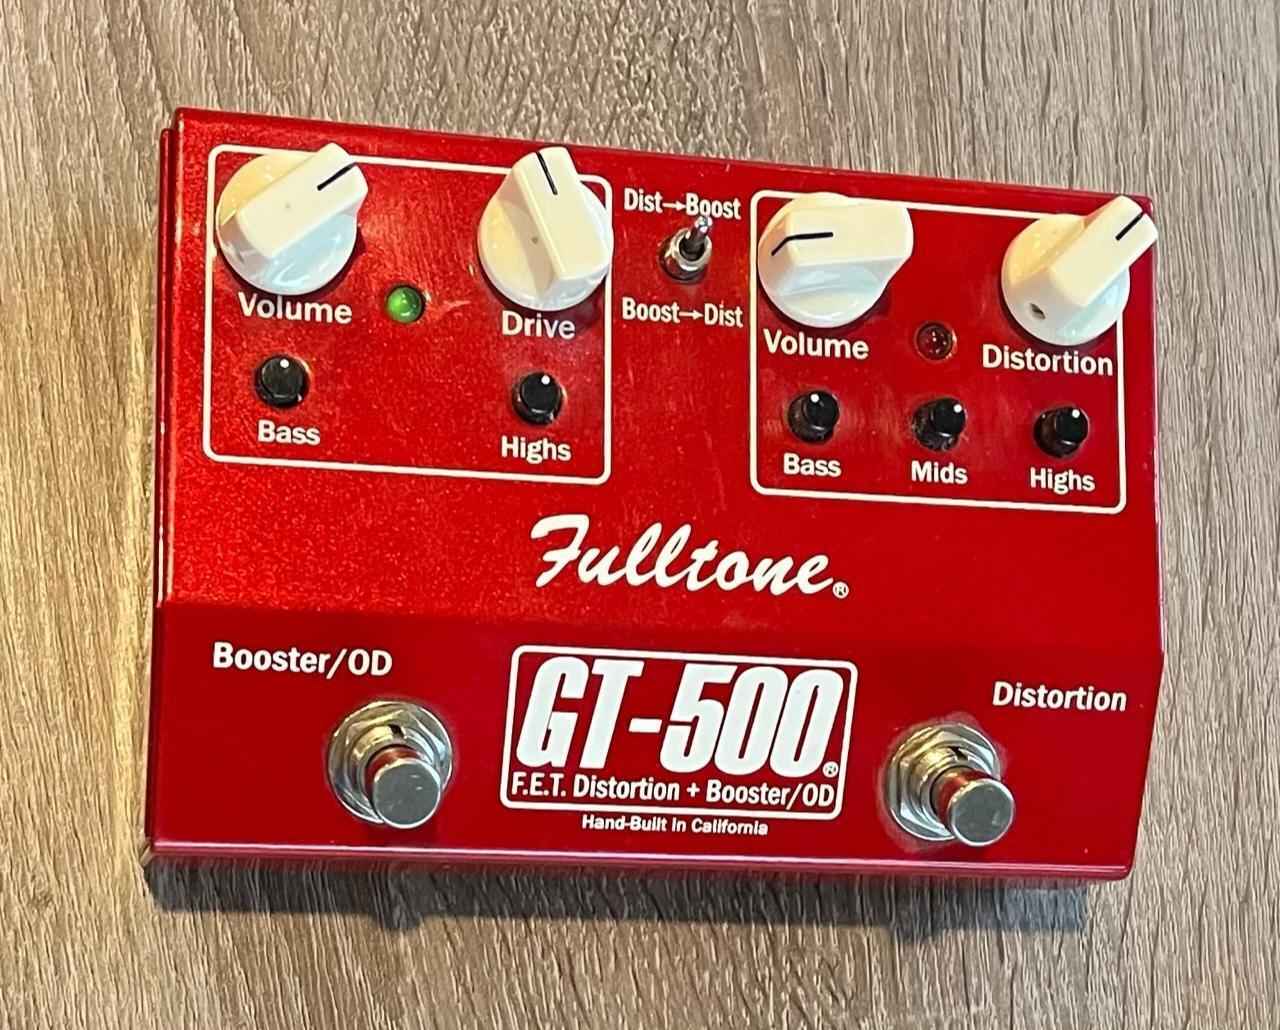 Used Fulltone GT-500 pedal - Sweetwater's Gear Exchange